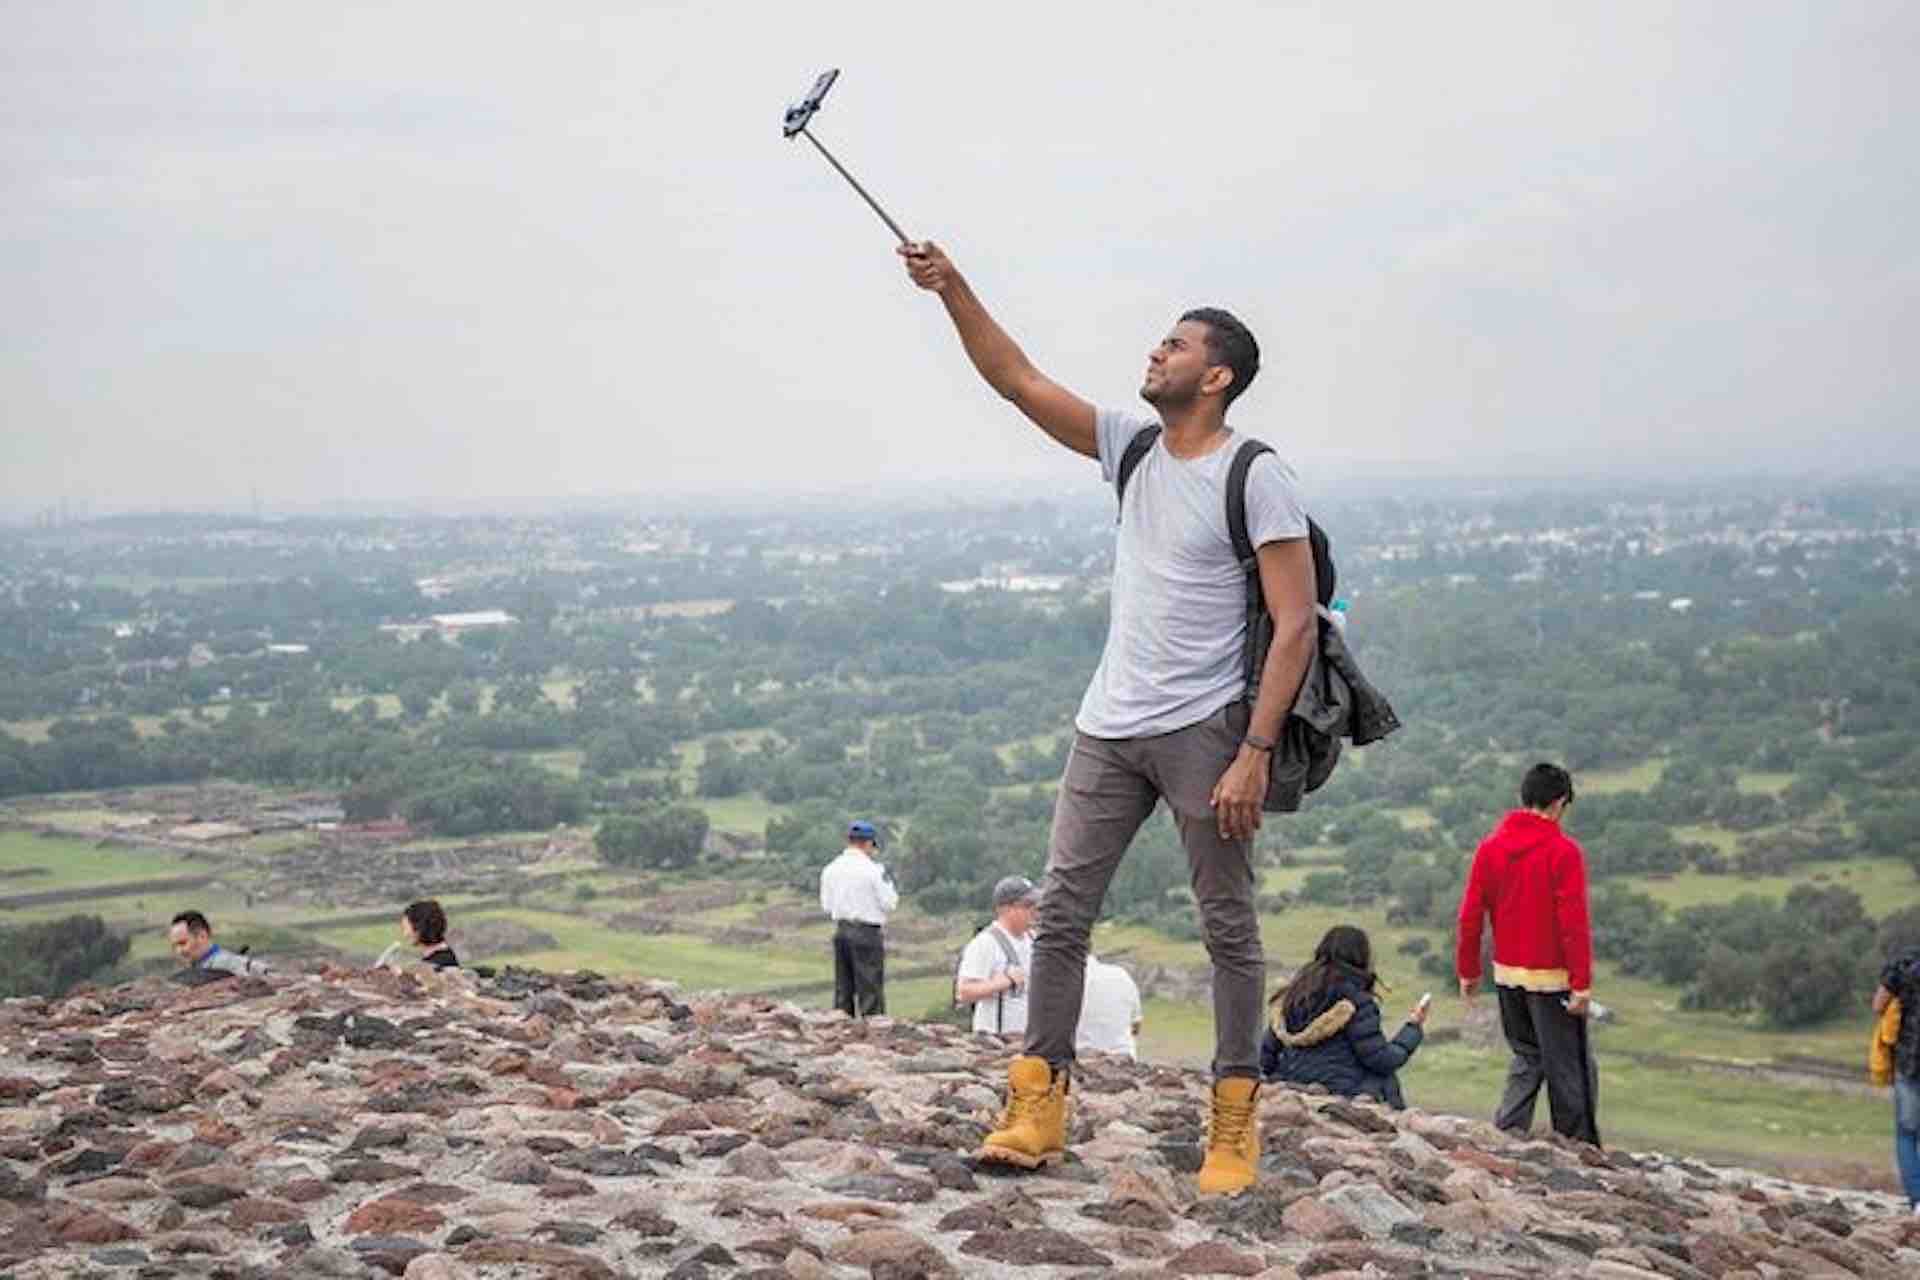 Teotihuacán Pyramids visitor taking selfie atop pyramid during tour